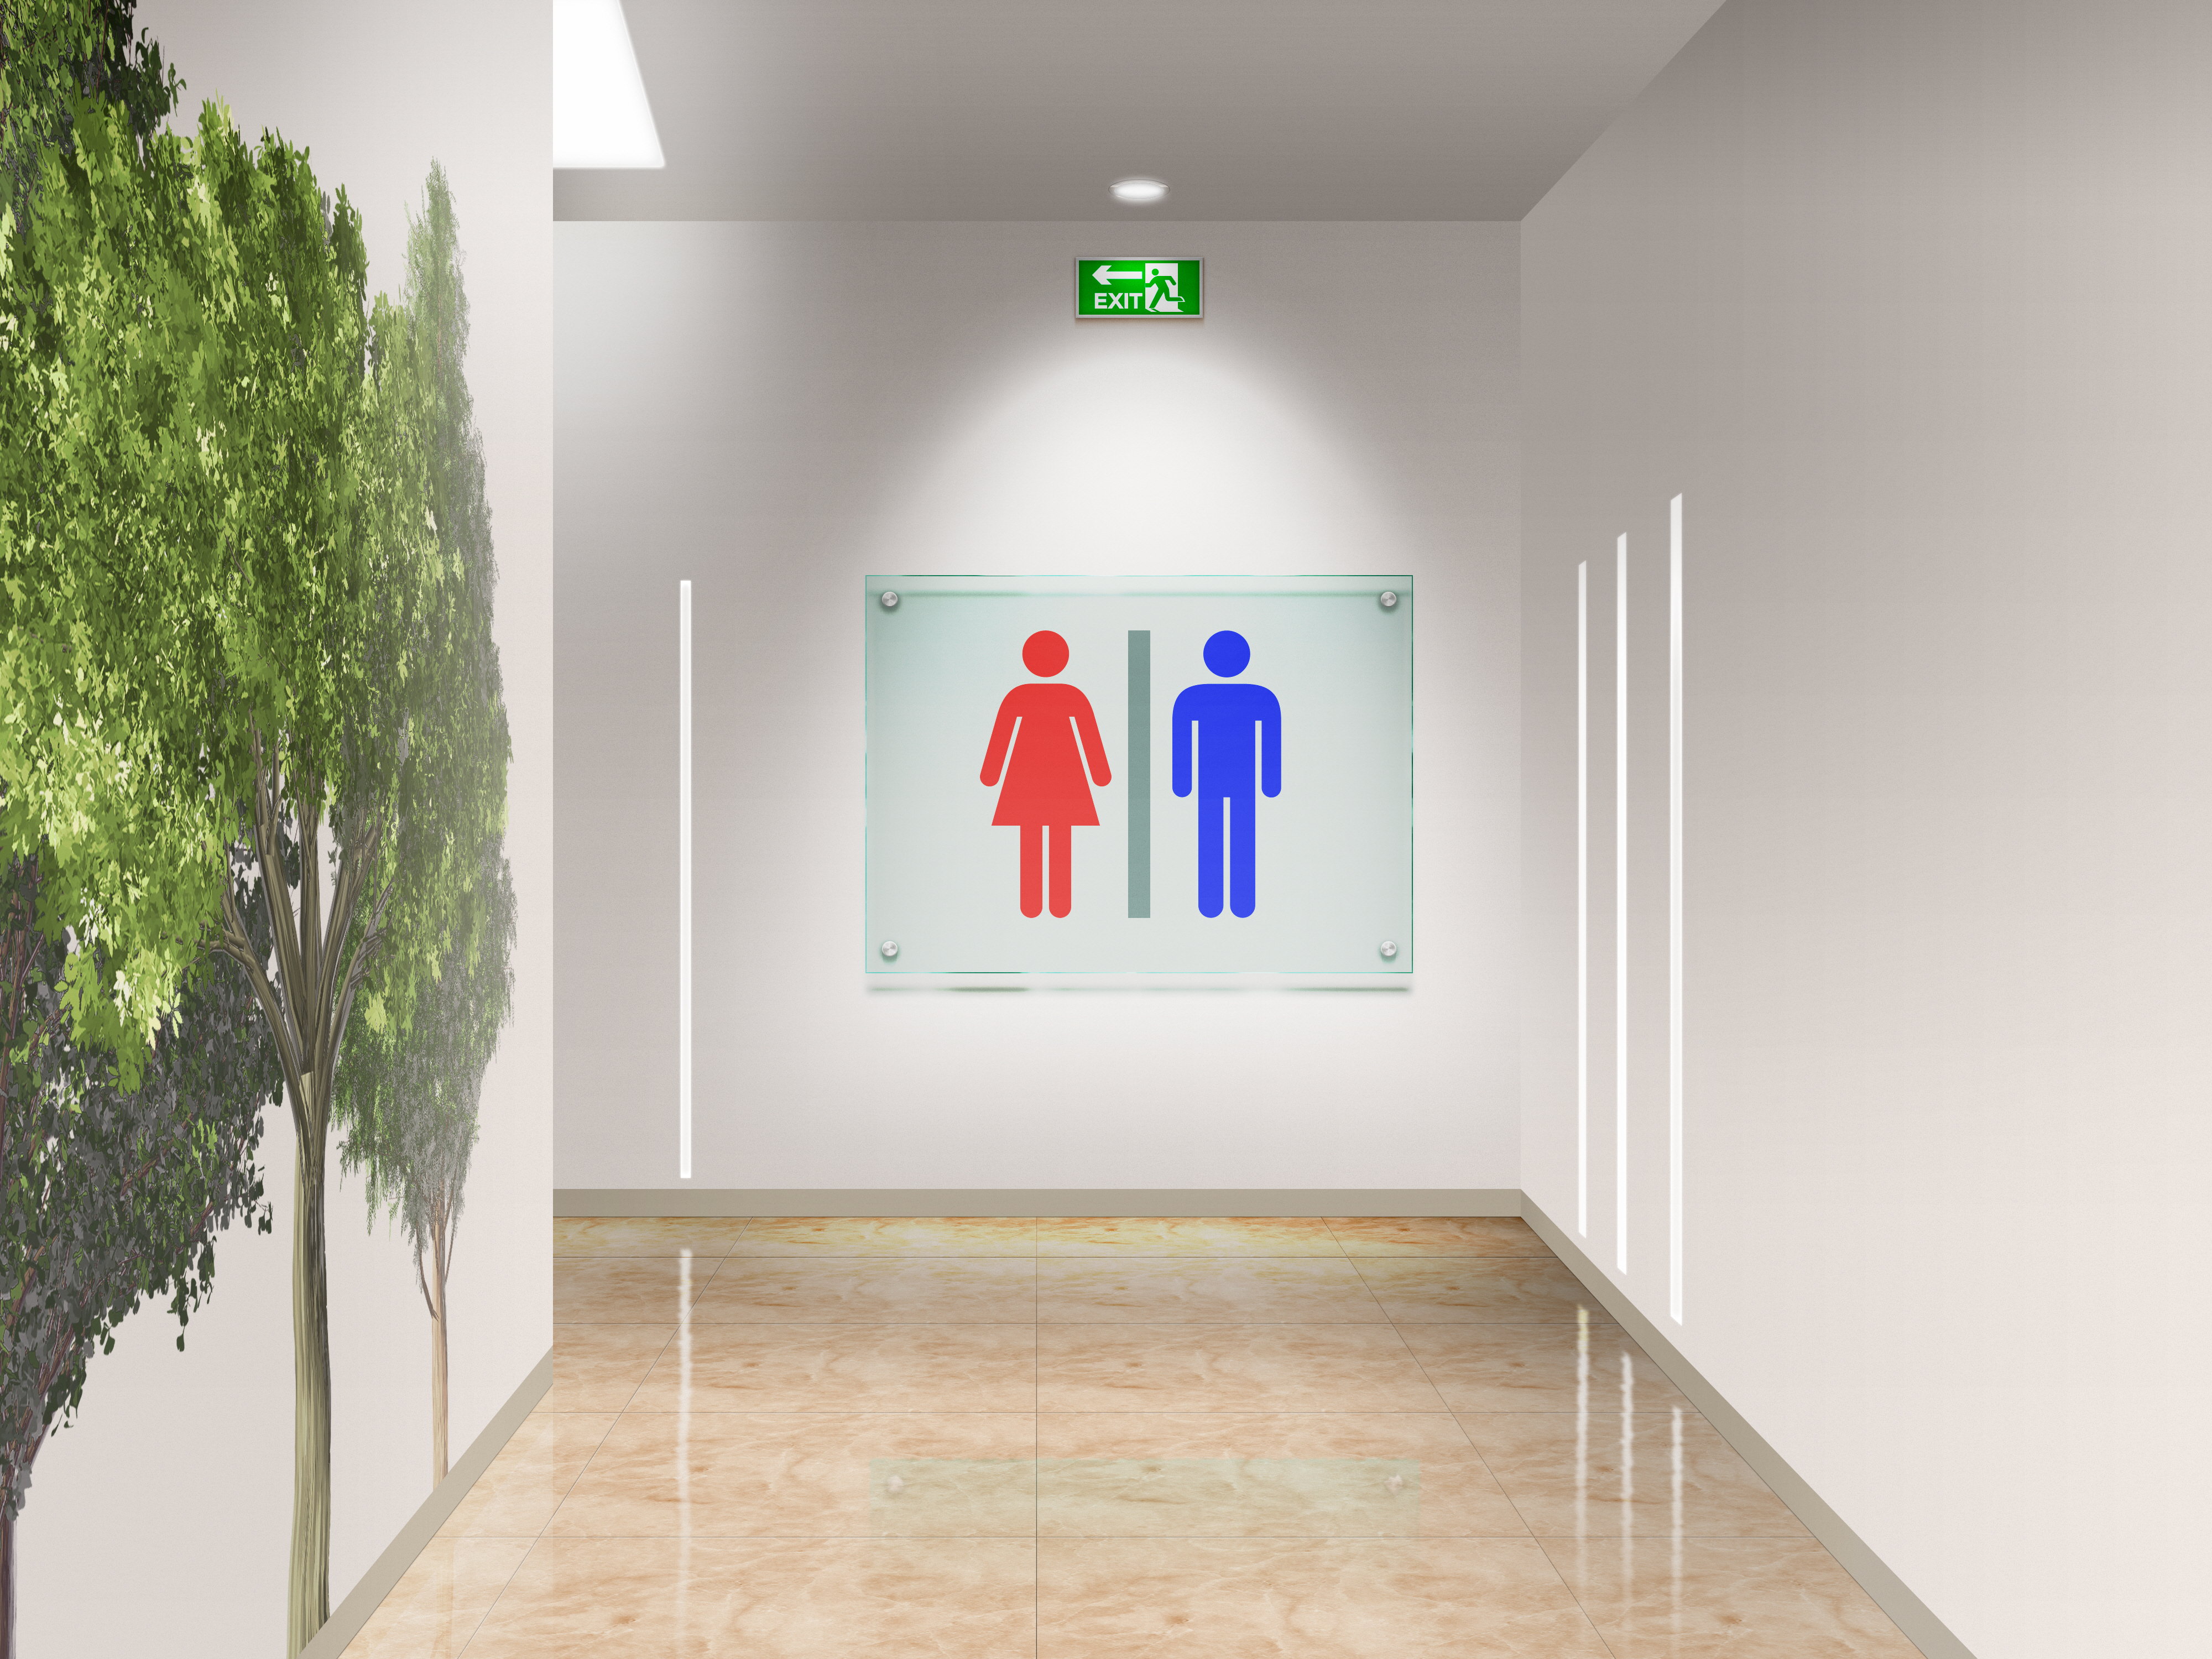 General 4000x3000 public restroom signs digital art